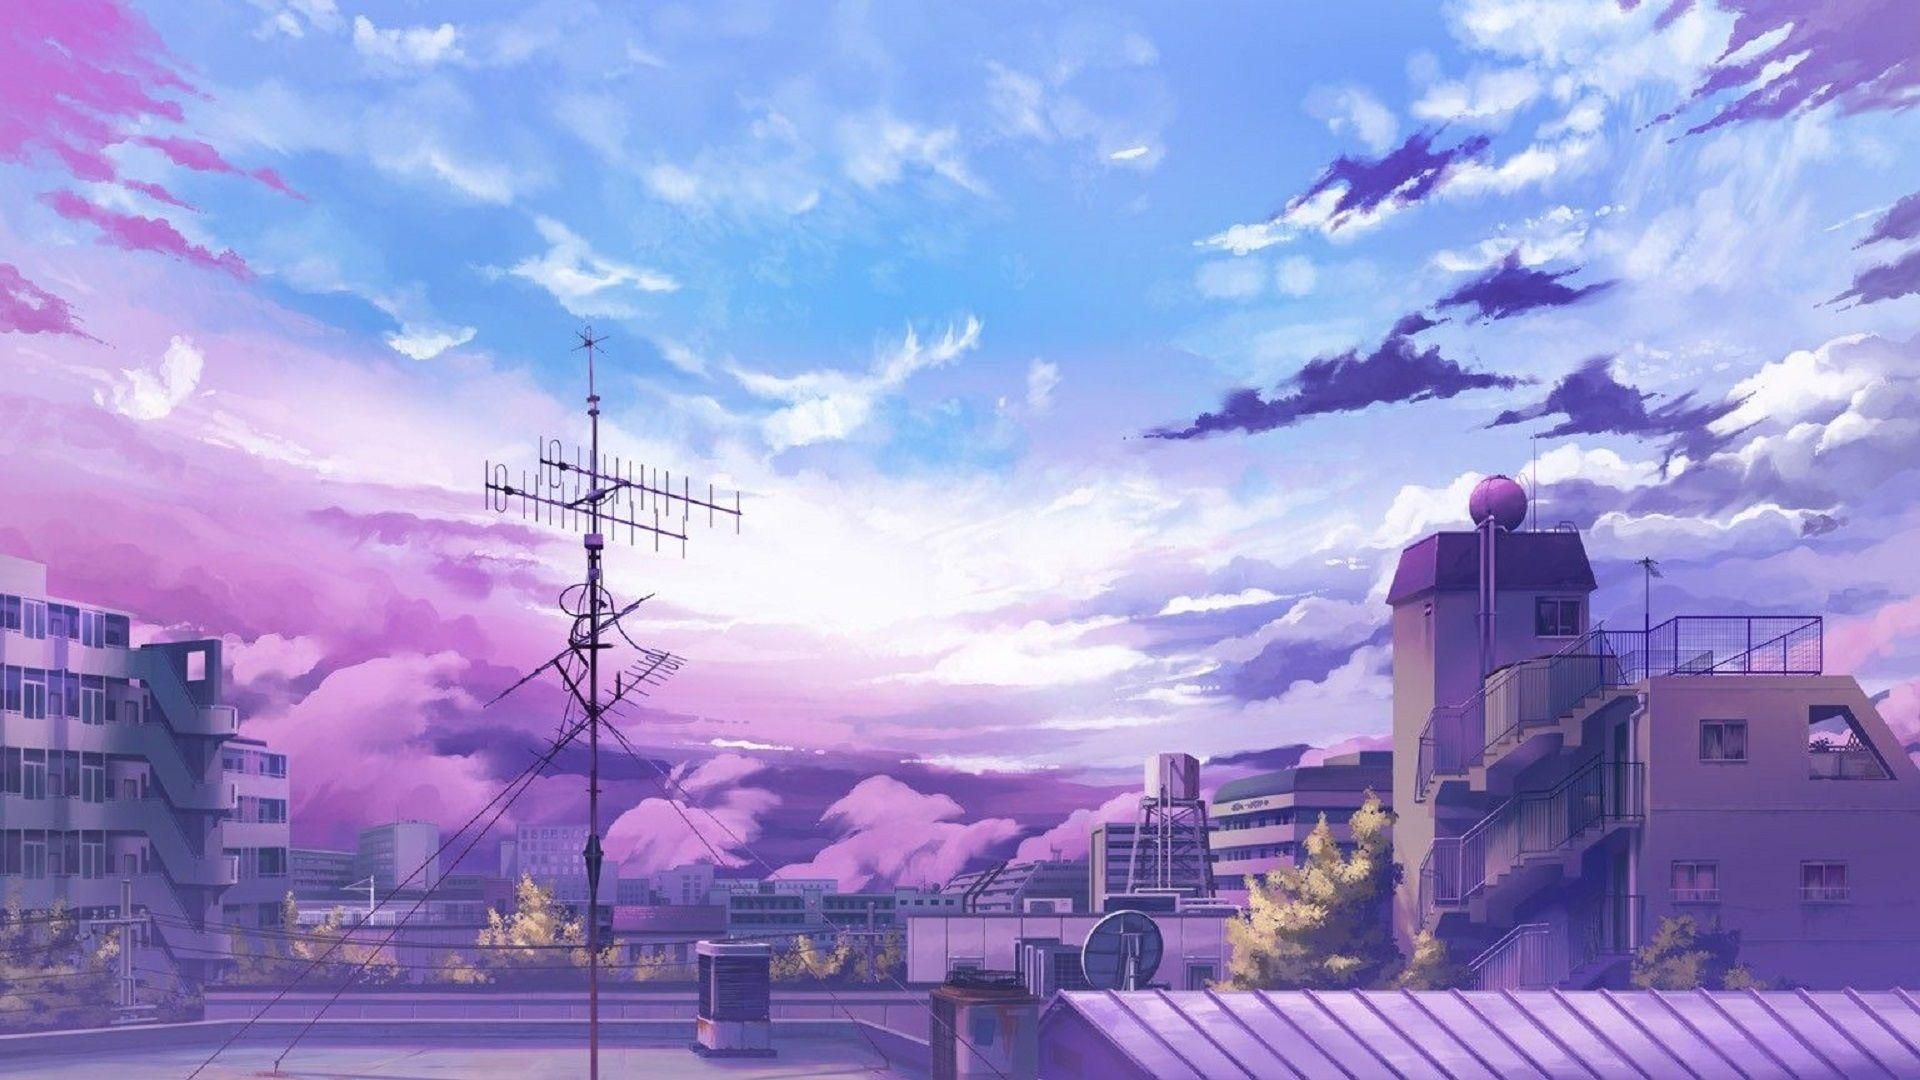 Anime Wallpaper Aesthetic. Anime scenery wallpaper, Anime scenery, Anime background wallpaper